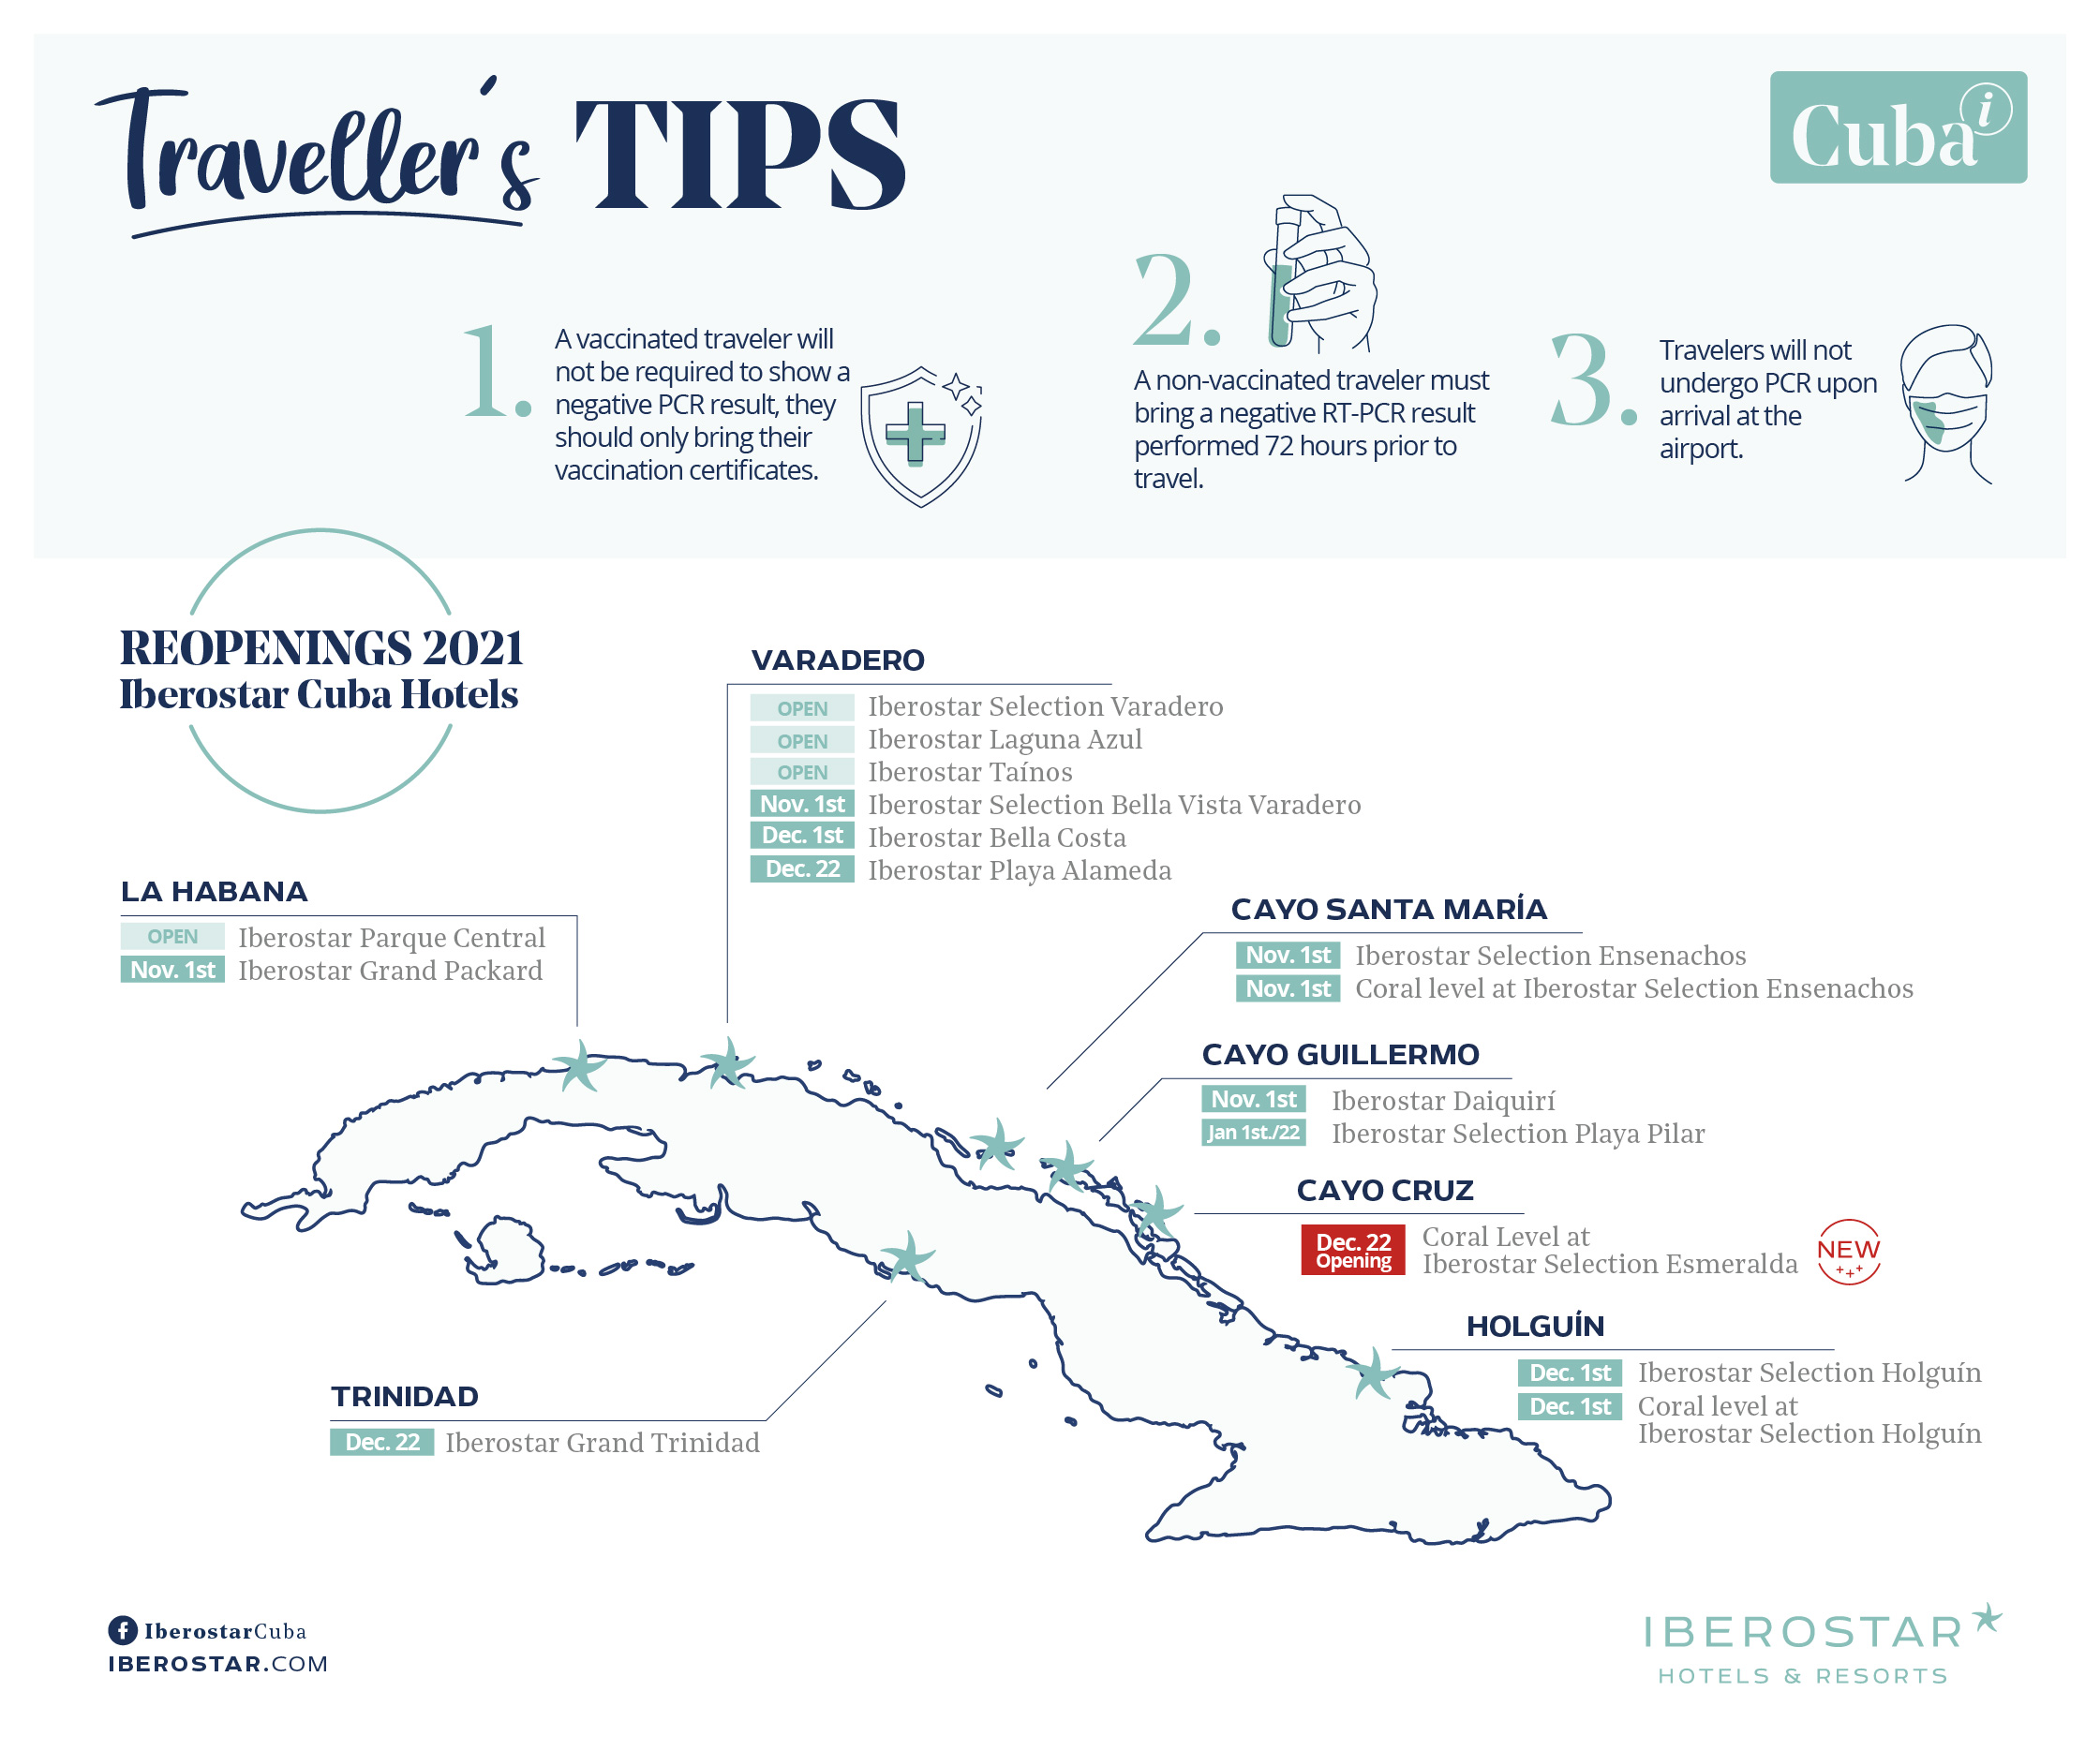 TIPS - Mapa con Reapertura Hoteles de Iberostar Cuba  2021 - EN